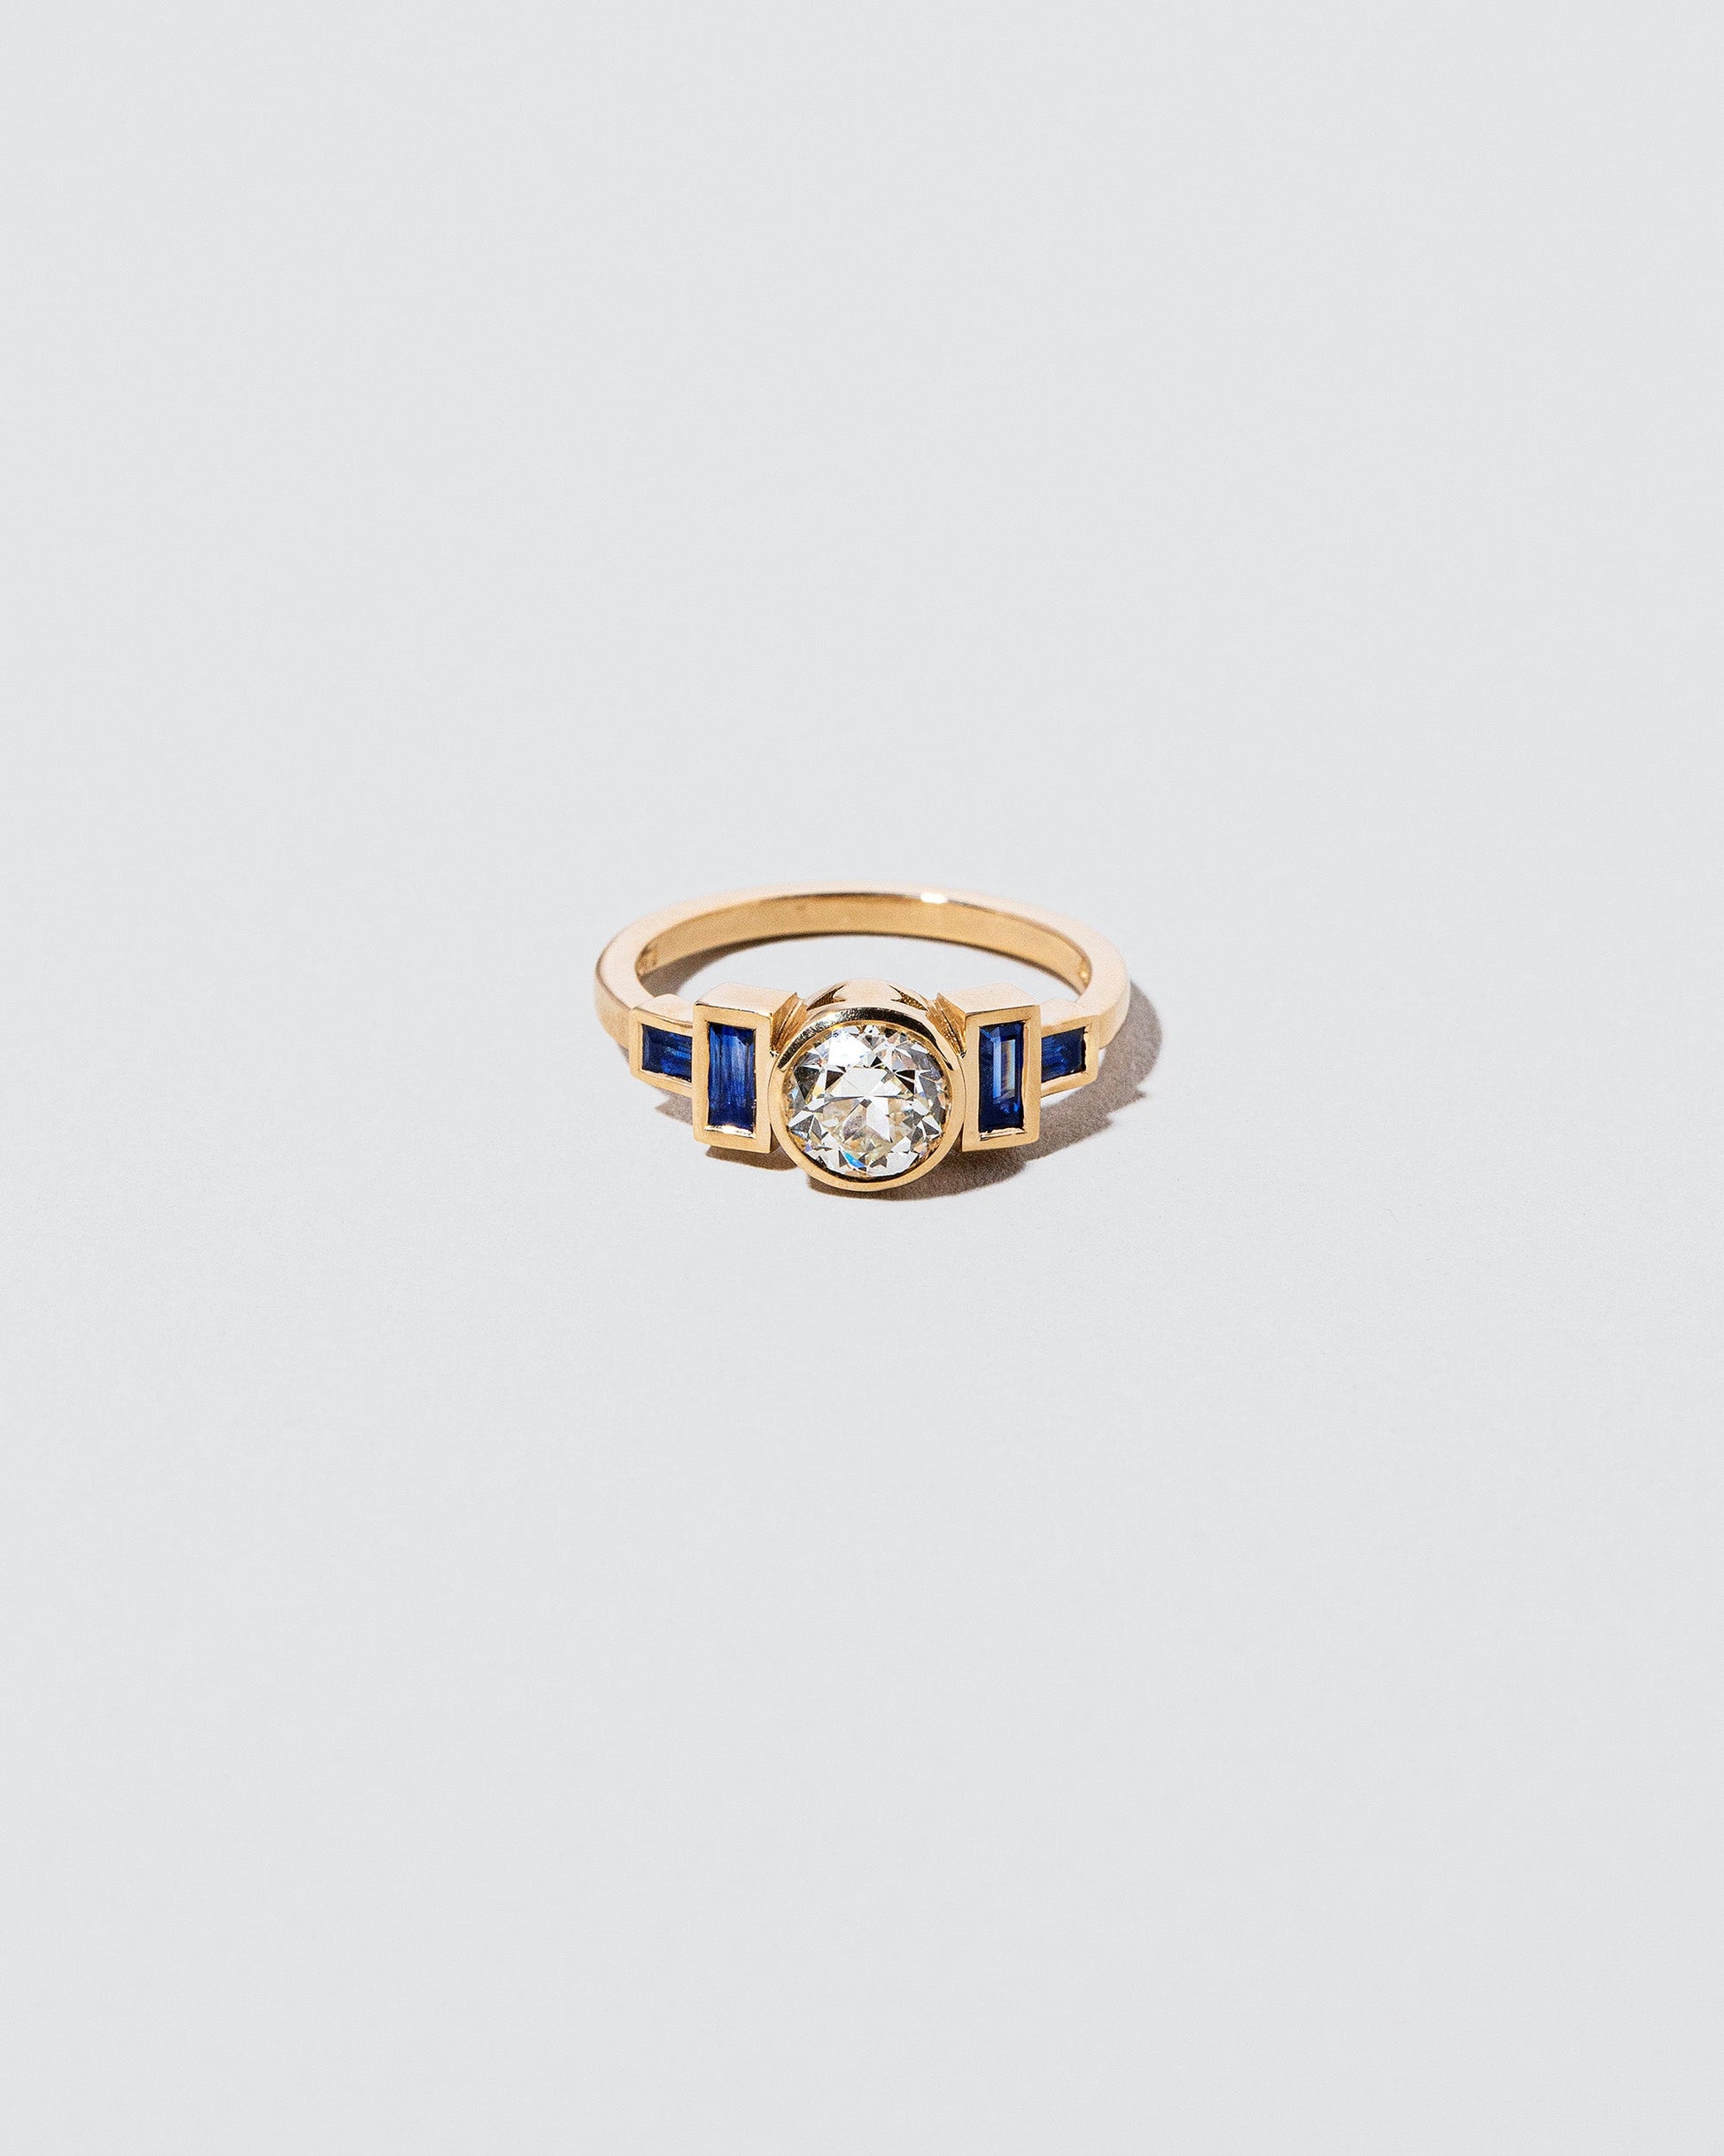 White Diamond & Blue Sapphire Third Eye Ring on light color background.